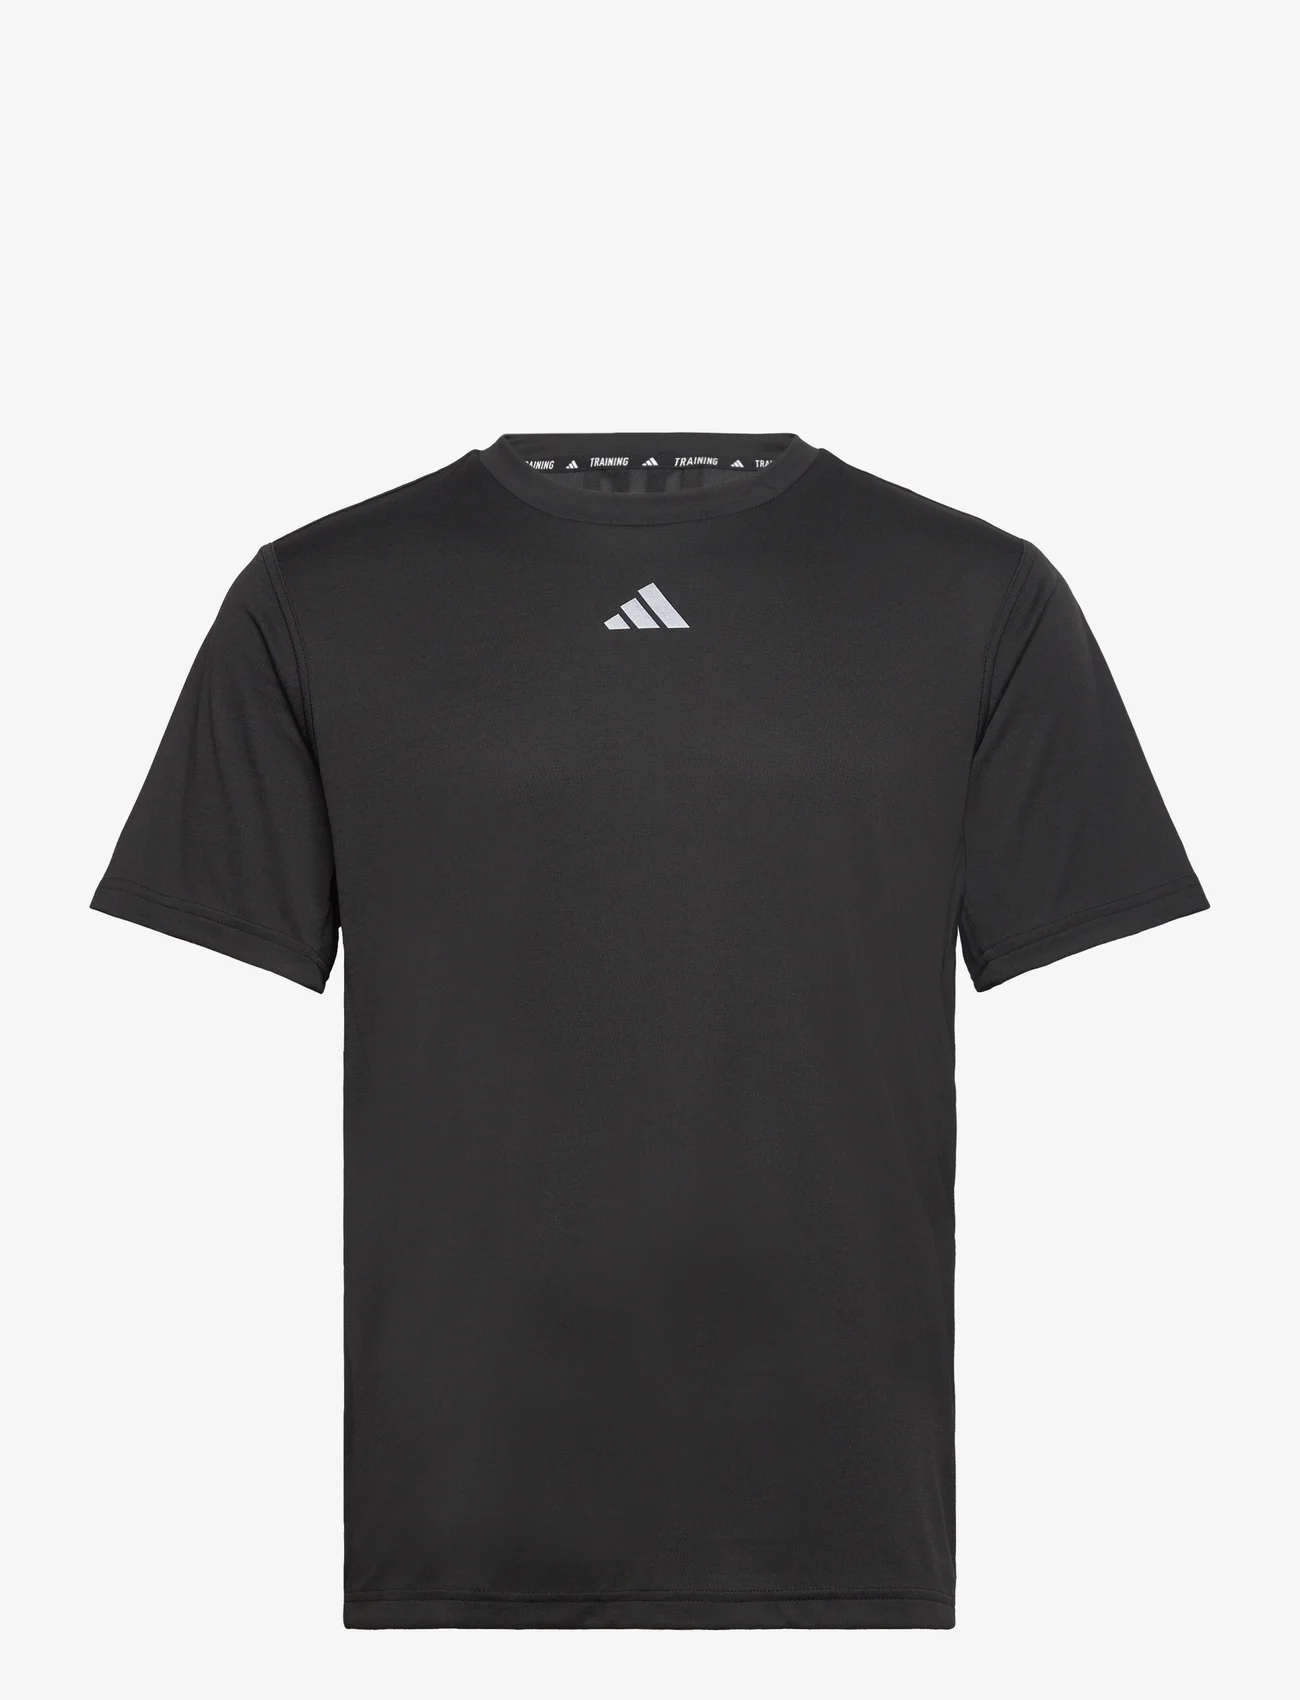 adidas Performance - HIIT 3S MES TEE - t-shirts - black - 0